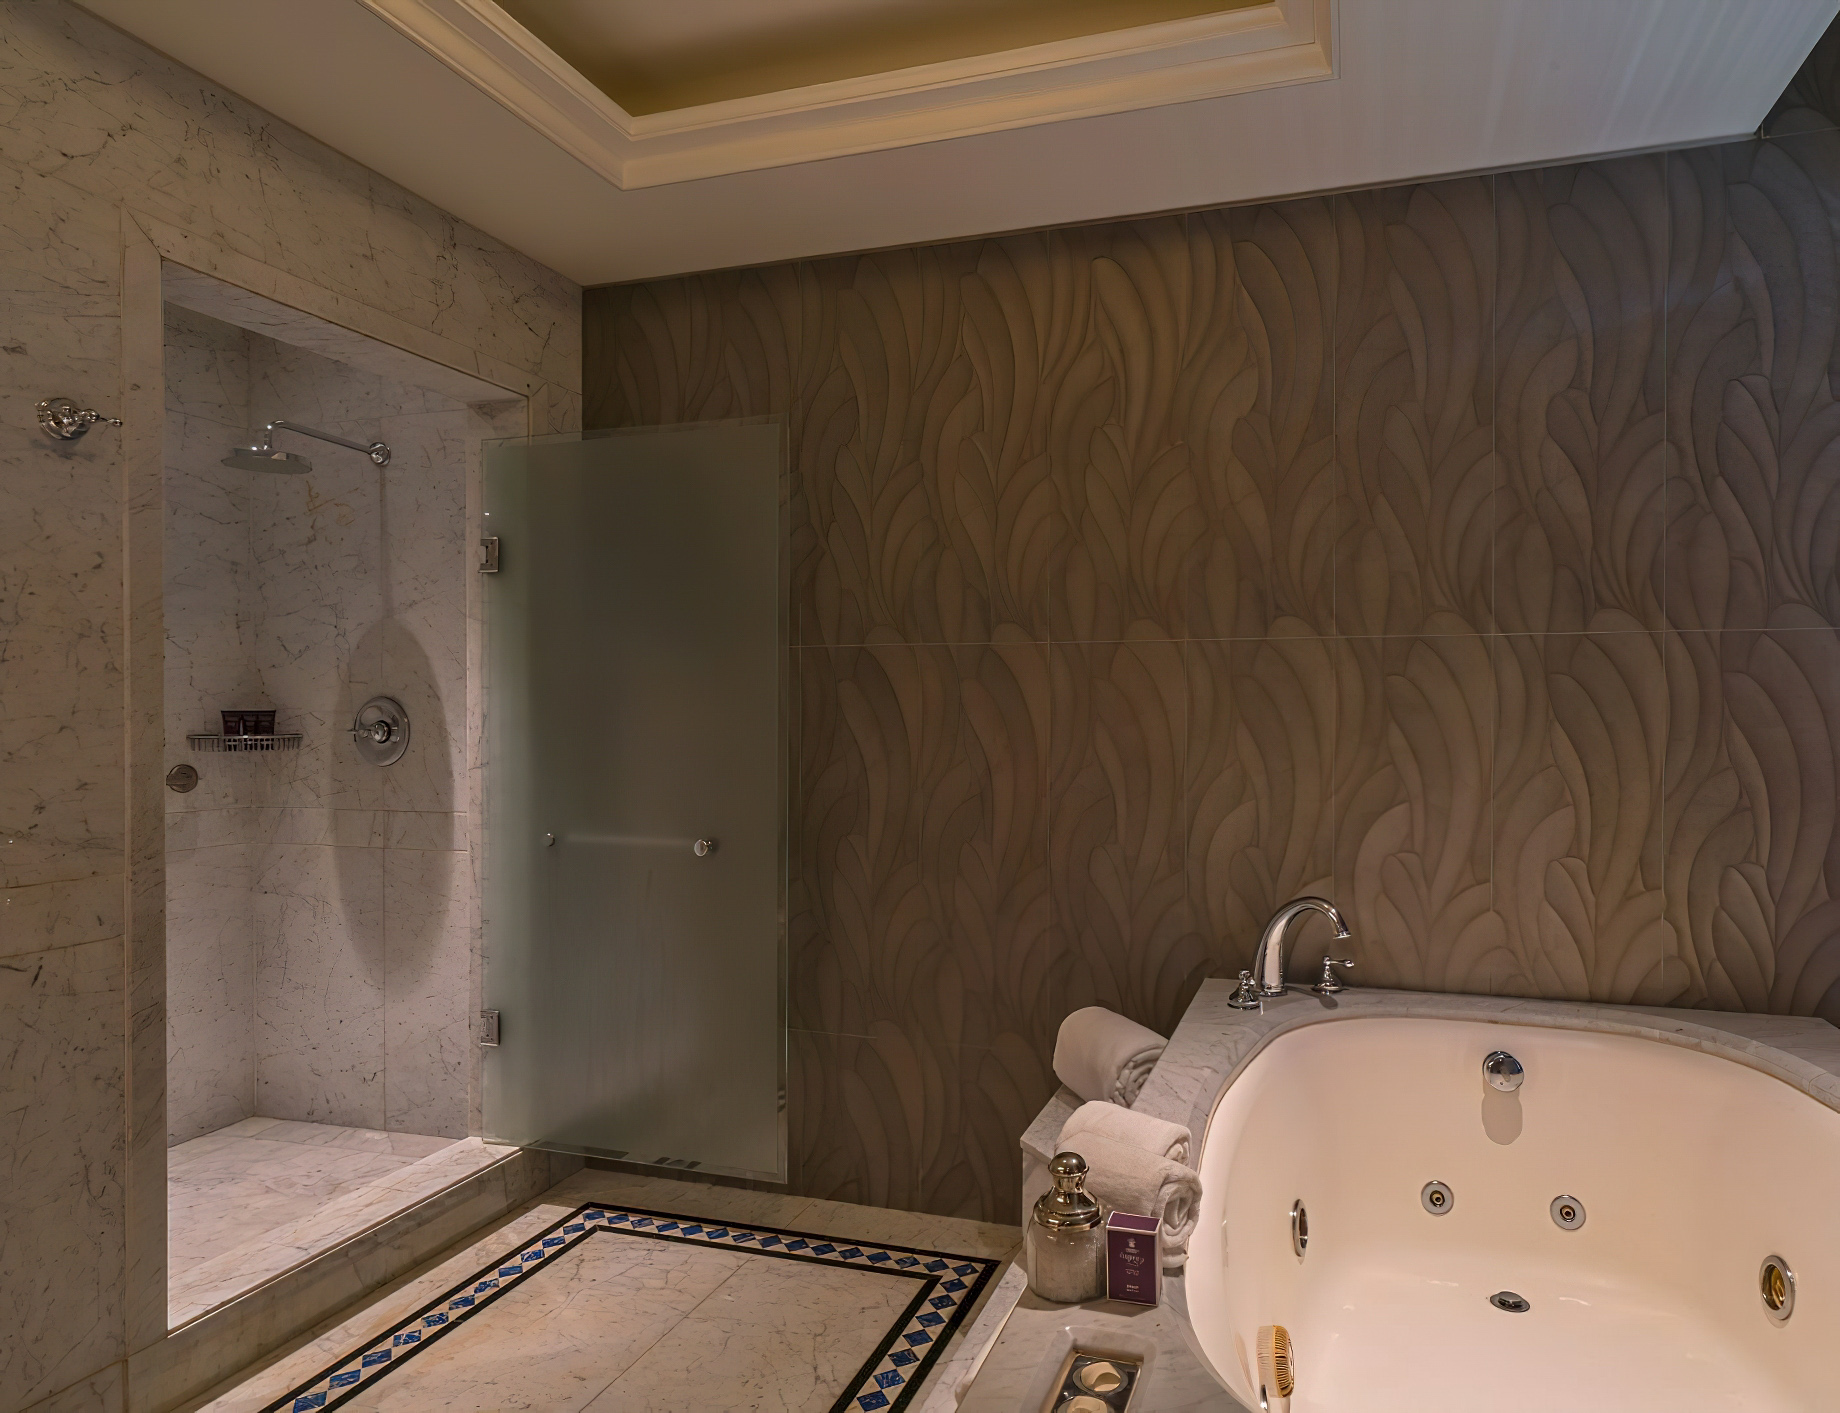 The Ritz-Carlton, Santiago Hotel - Santiago, Chile - Presidential Suite Bathroom Shower